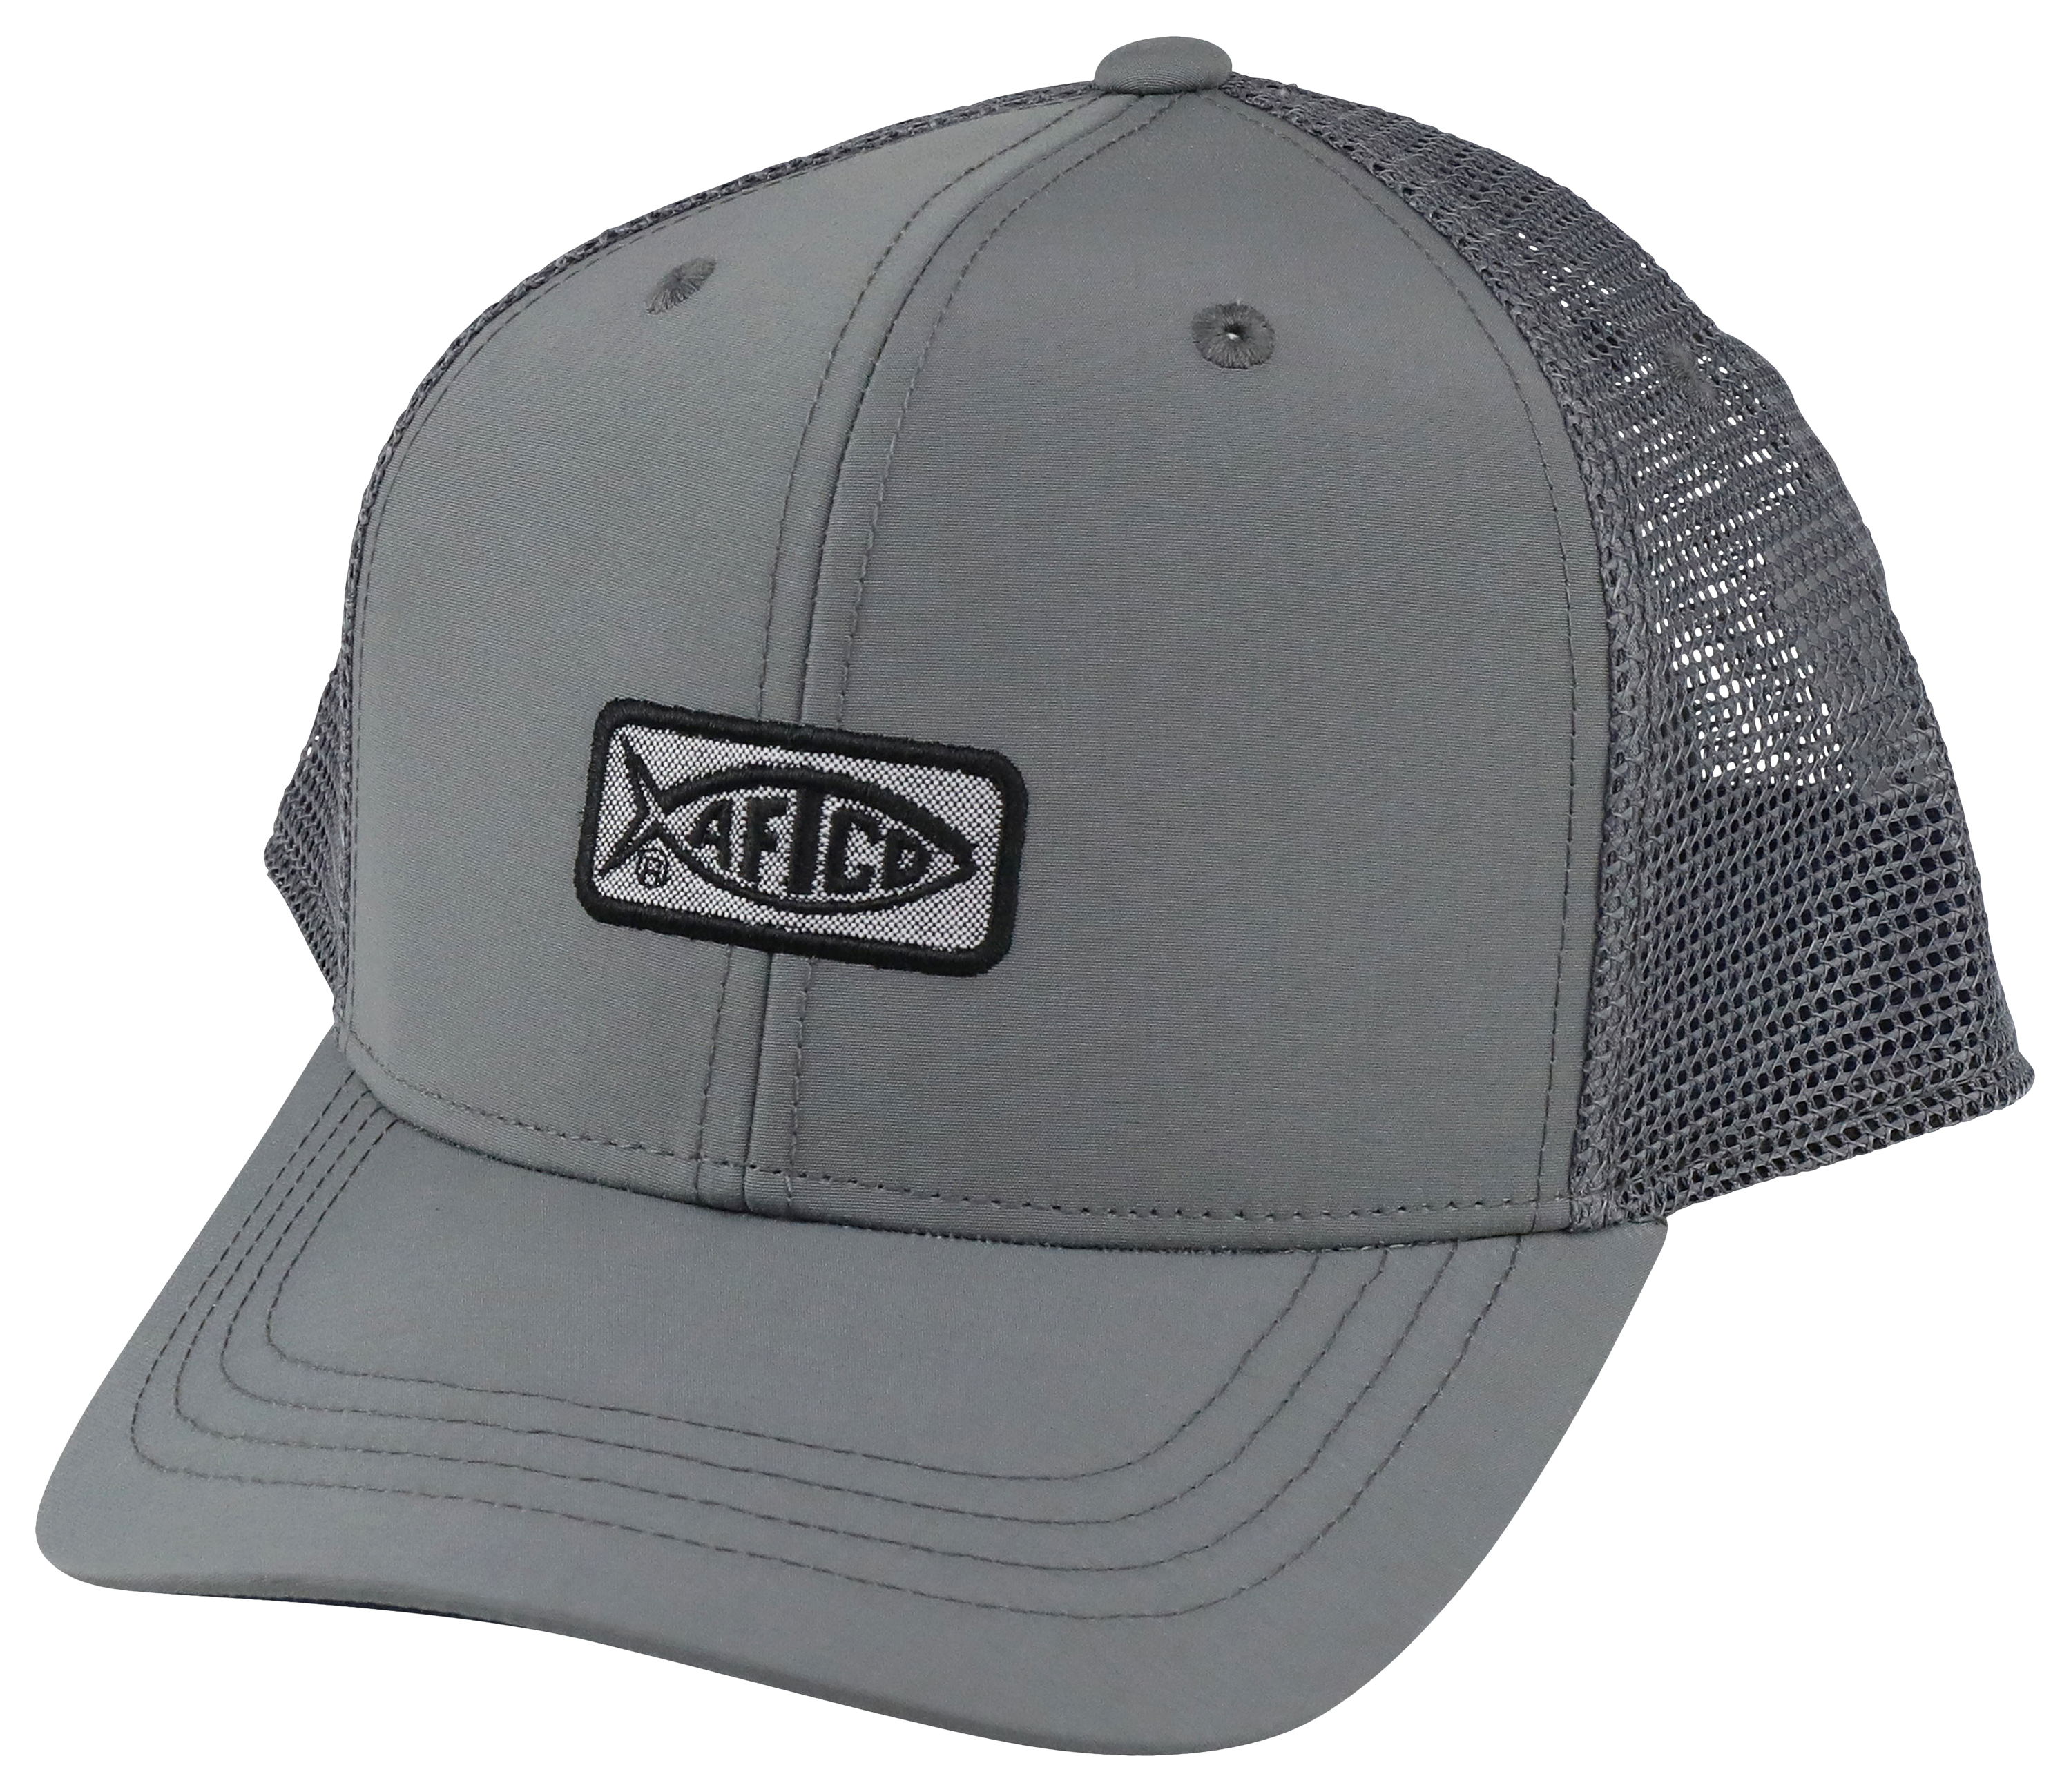 AFTCO Original Fishing Trucker Hat - Charcoal